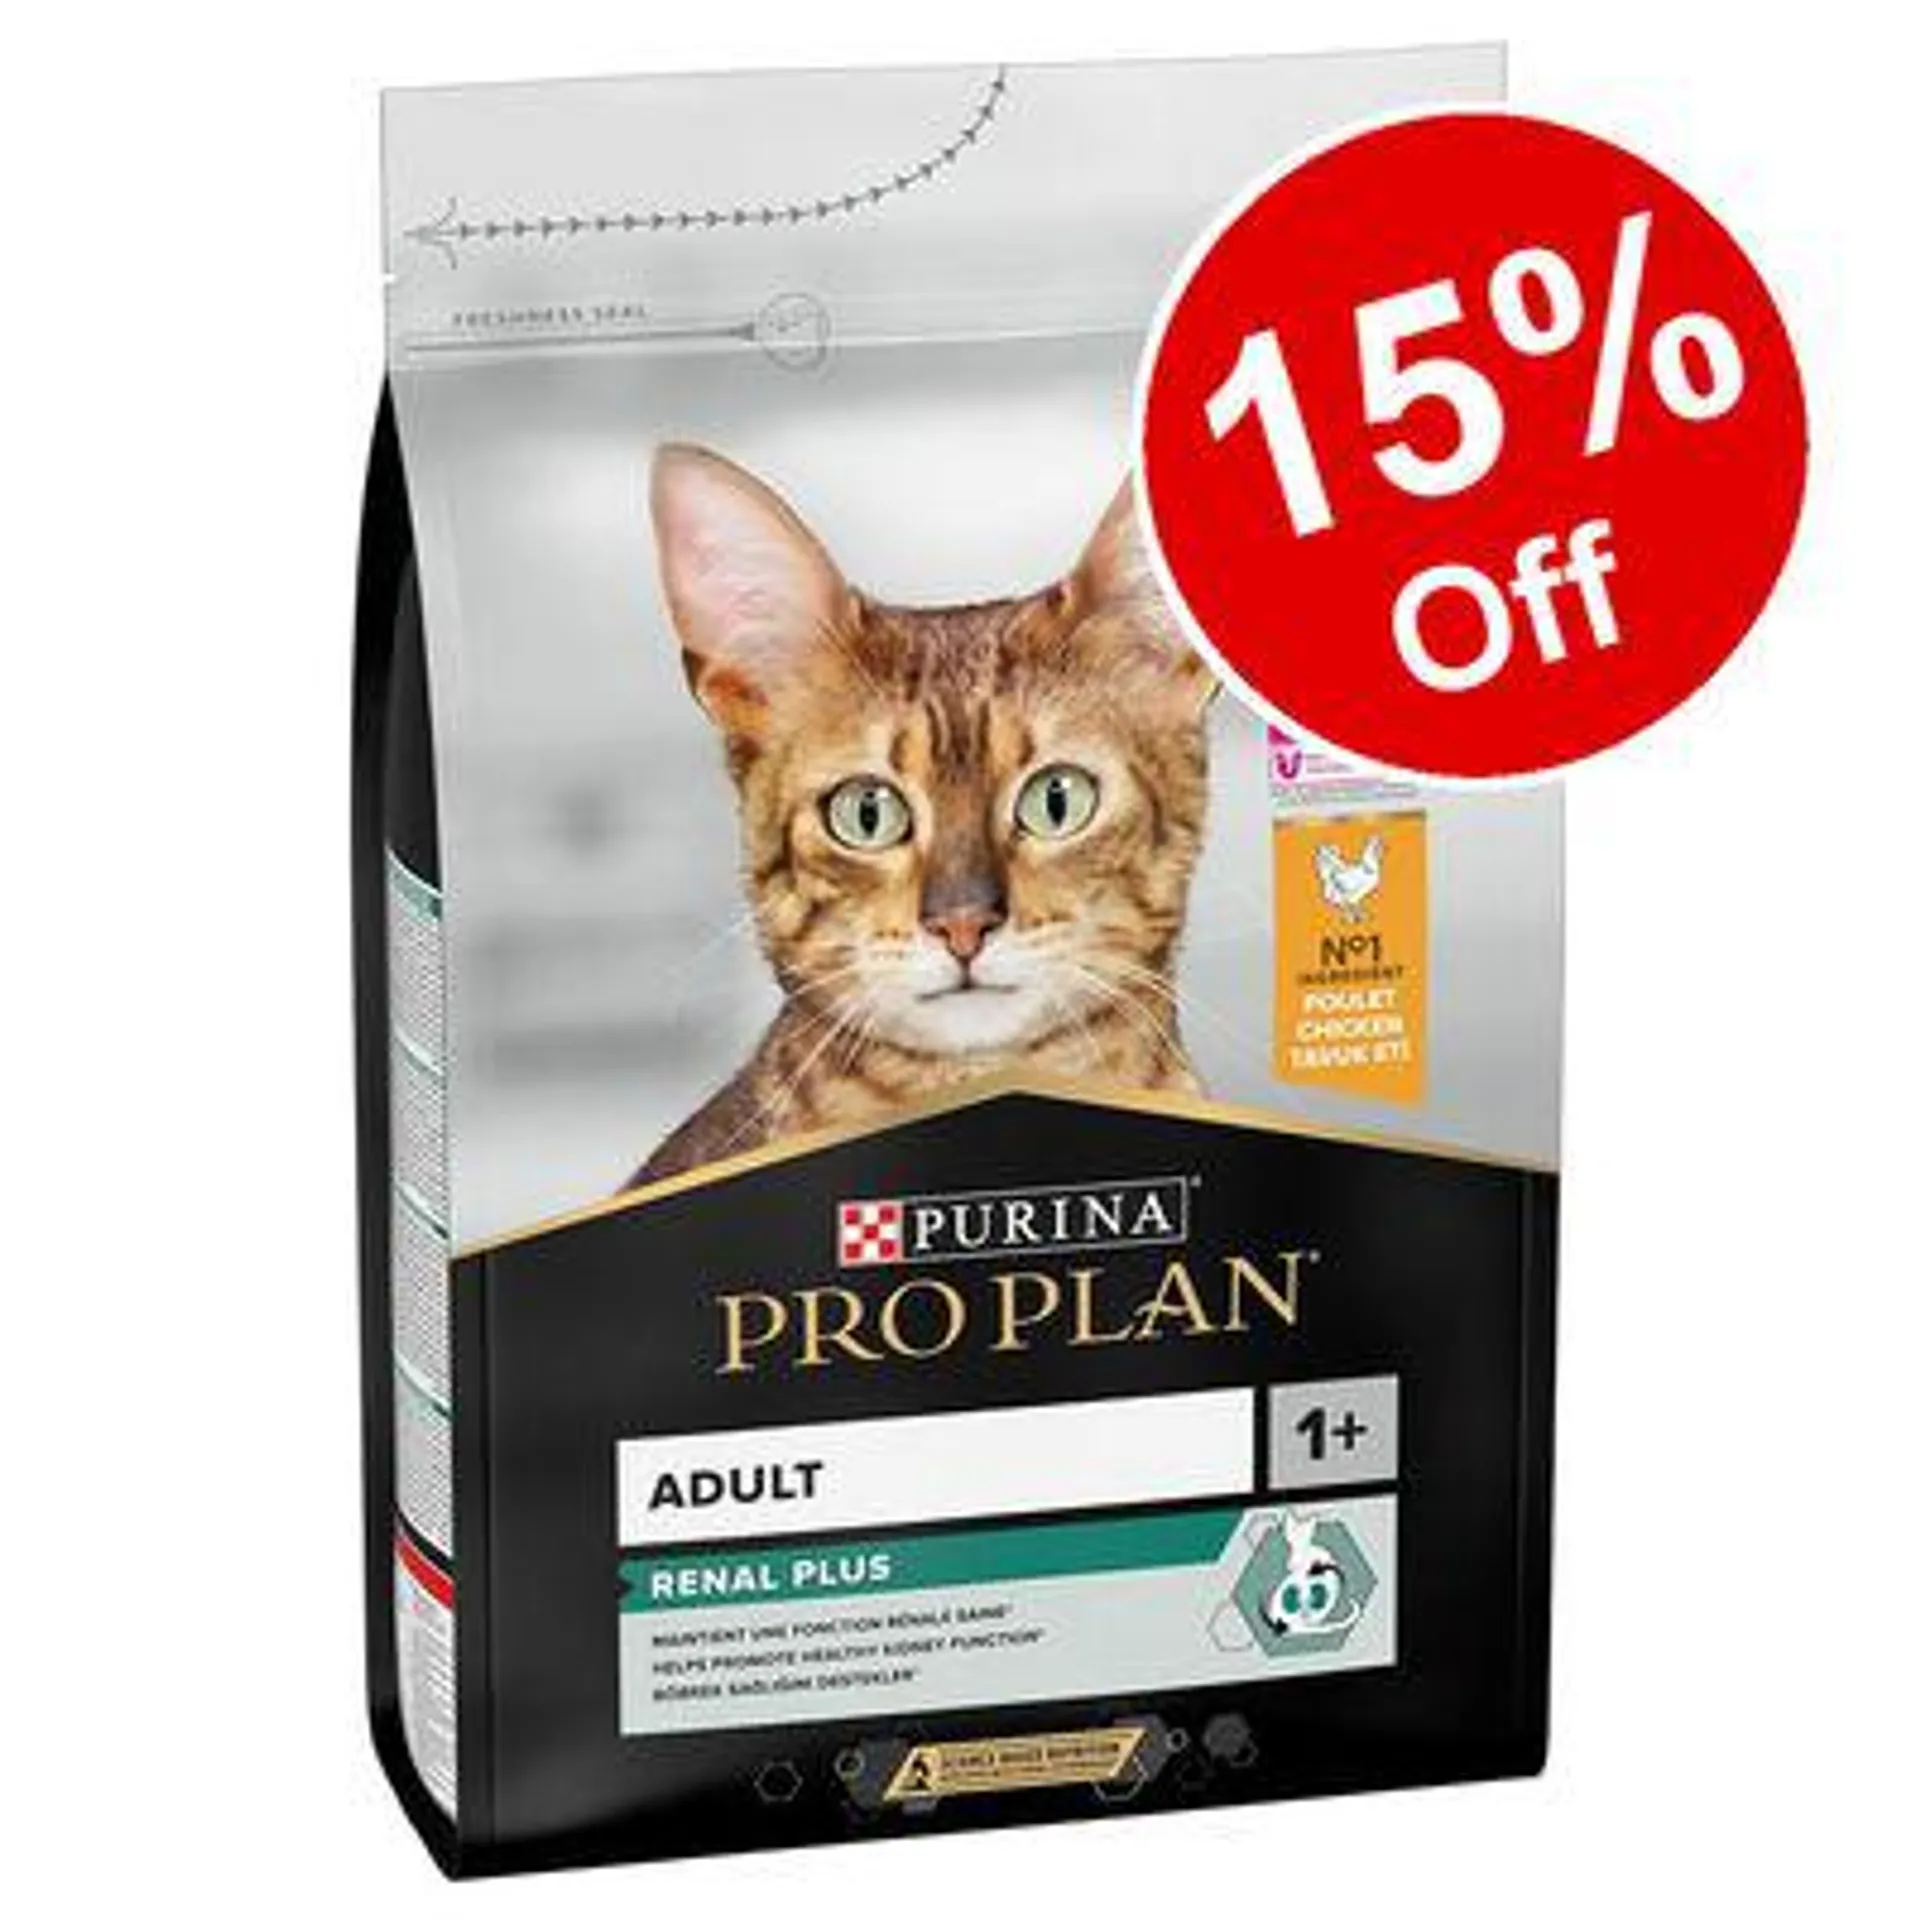 3kg Purina Pro Plan Dry Cat Food - 15% Off! *